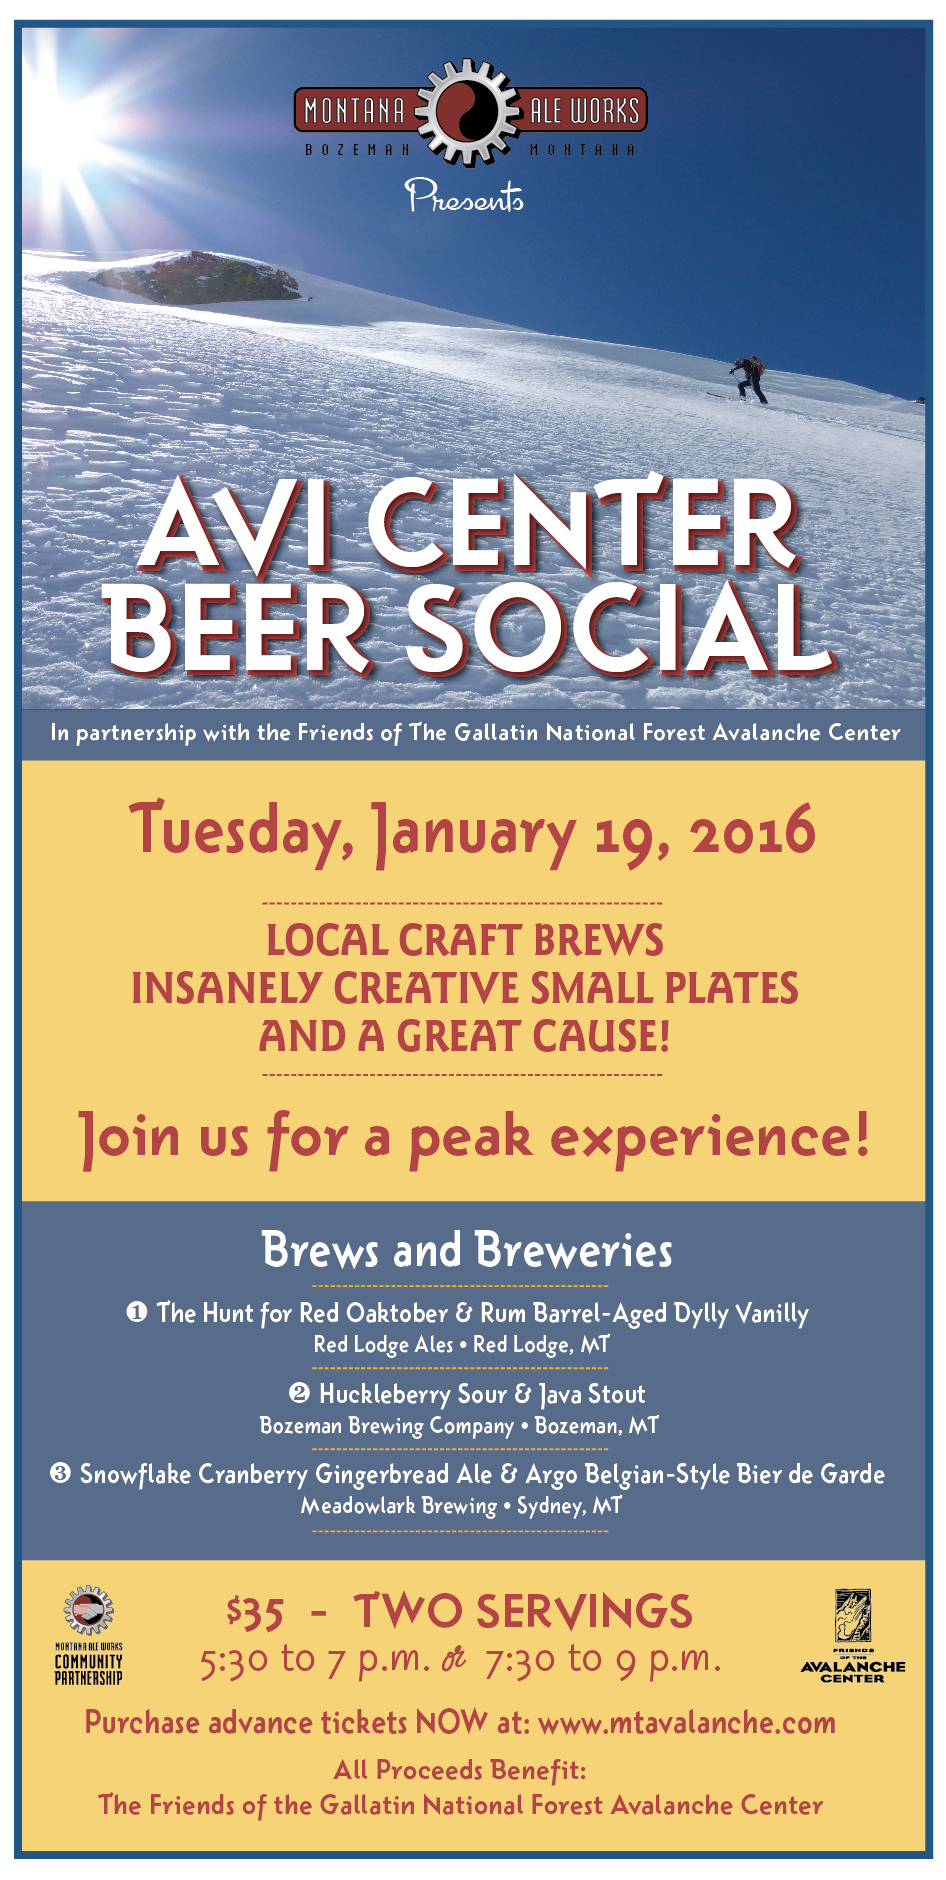 Avalanche Center Beer Social - Jan 19